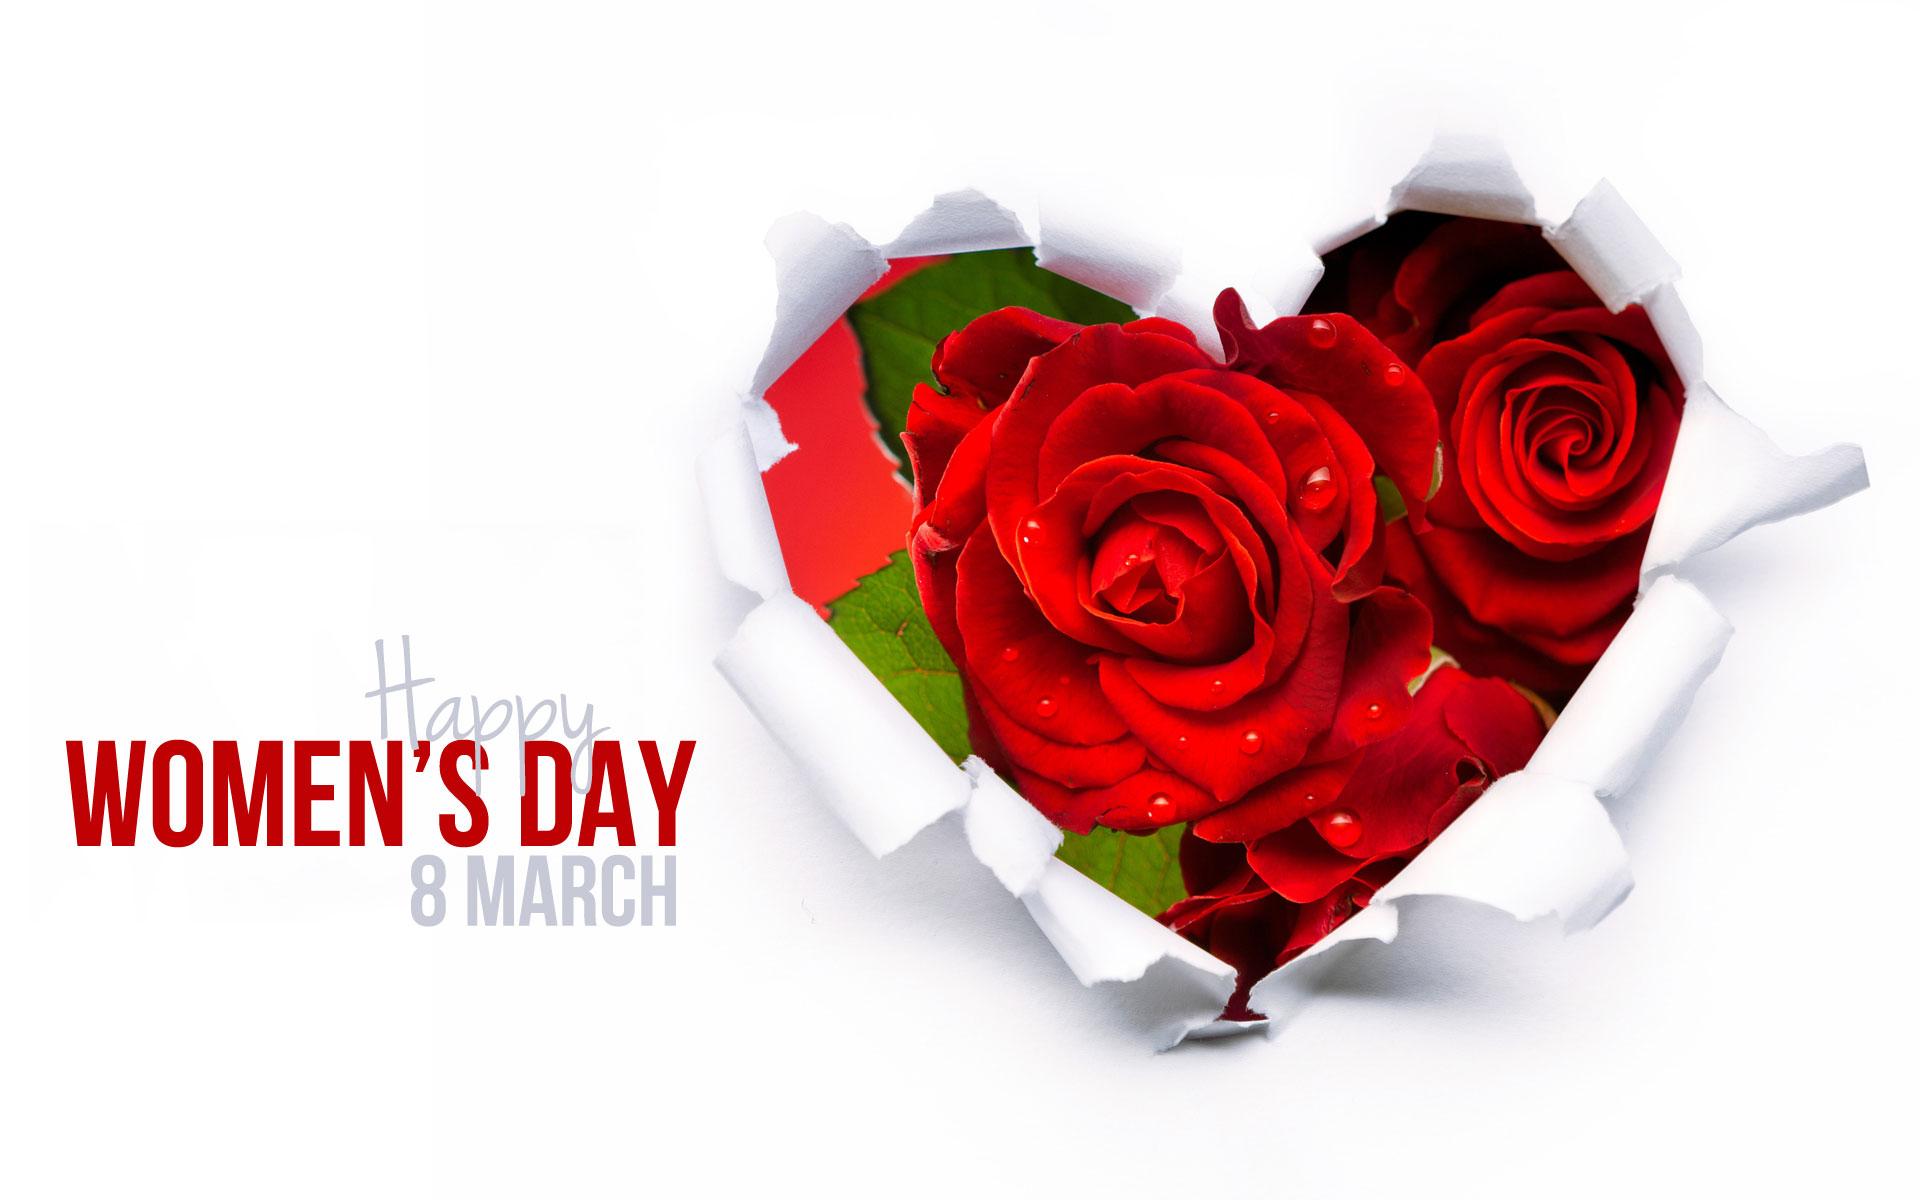 International Women's Day Wallpaper for Free Download Happy Women's Day Wallpaper Image for Whatsapp & Facebook Women's Day Image, Wallpaper, Animated GIFs, Photo, Pics .'s Day Wallpaper